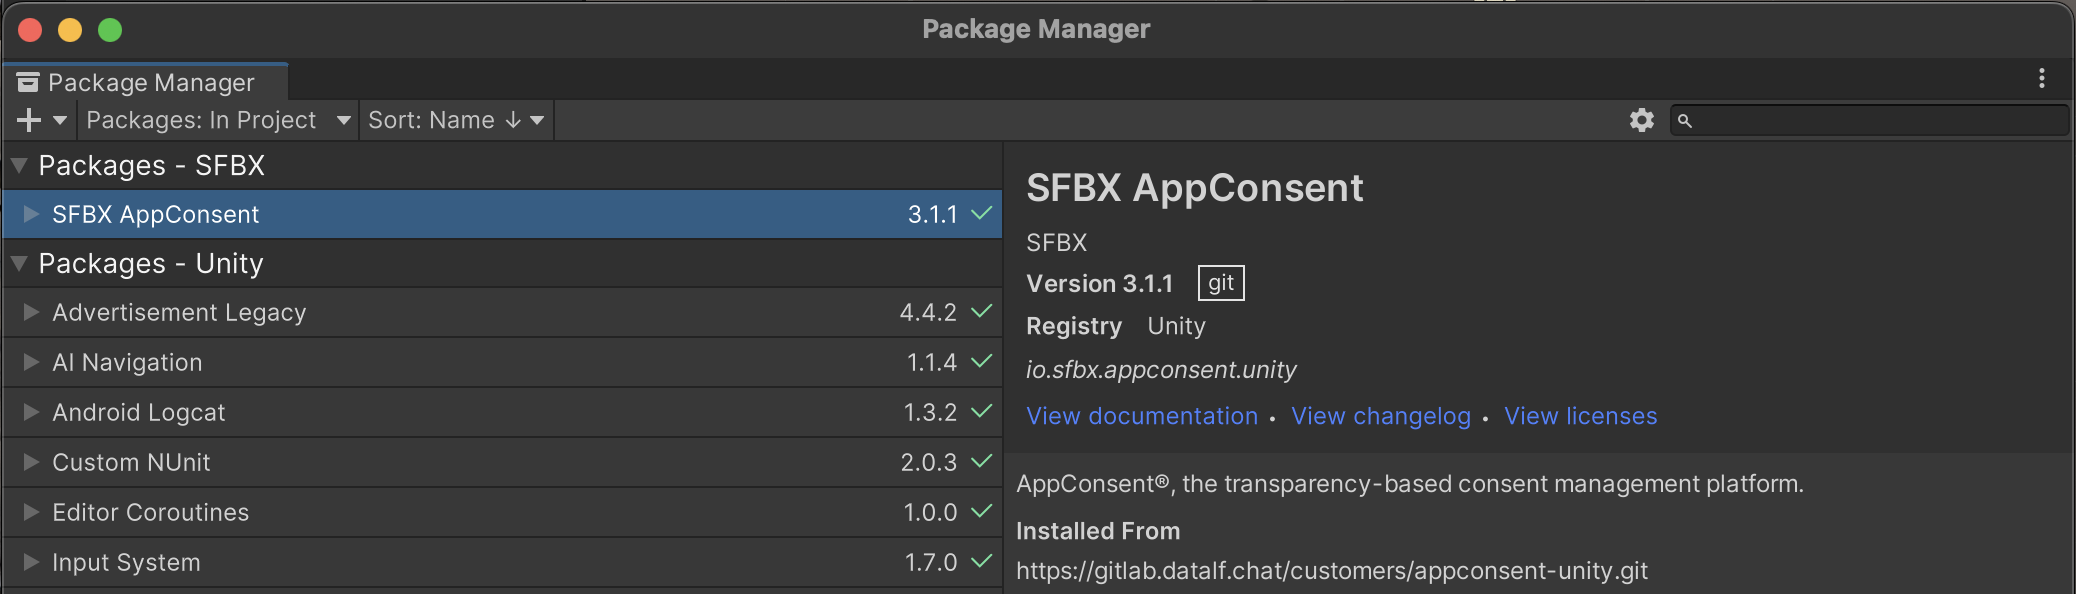 SFBX AppConsent package